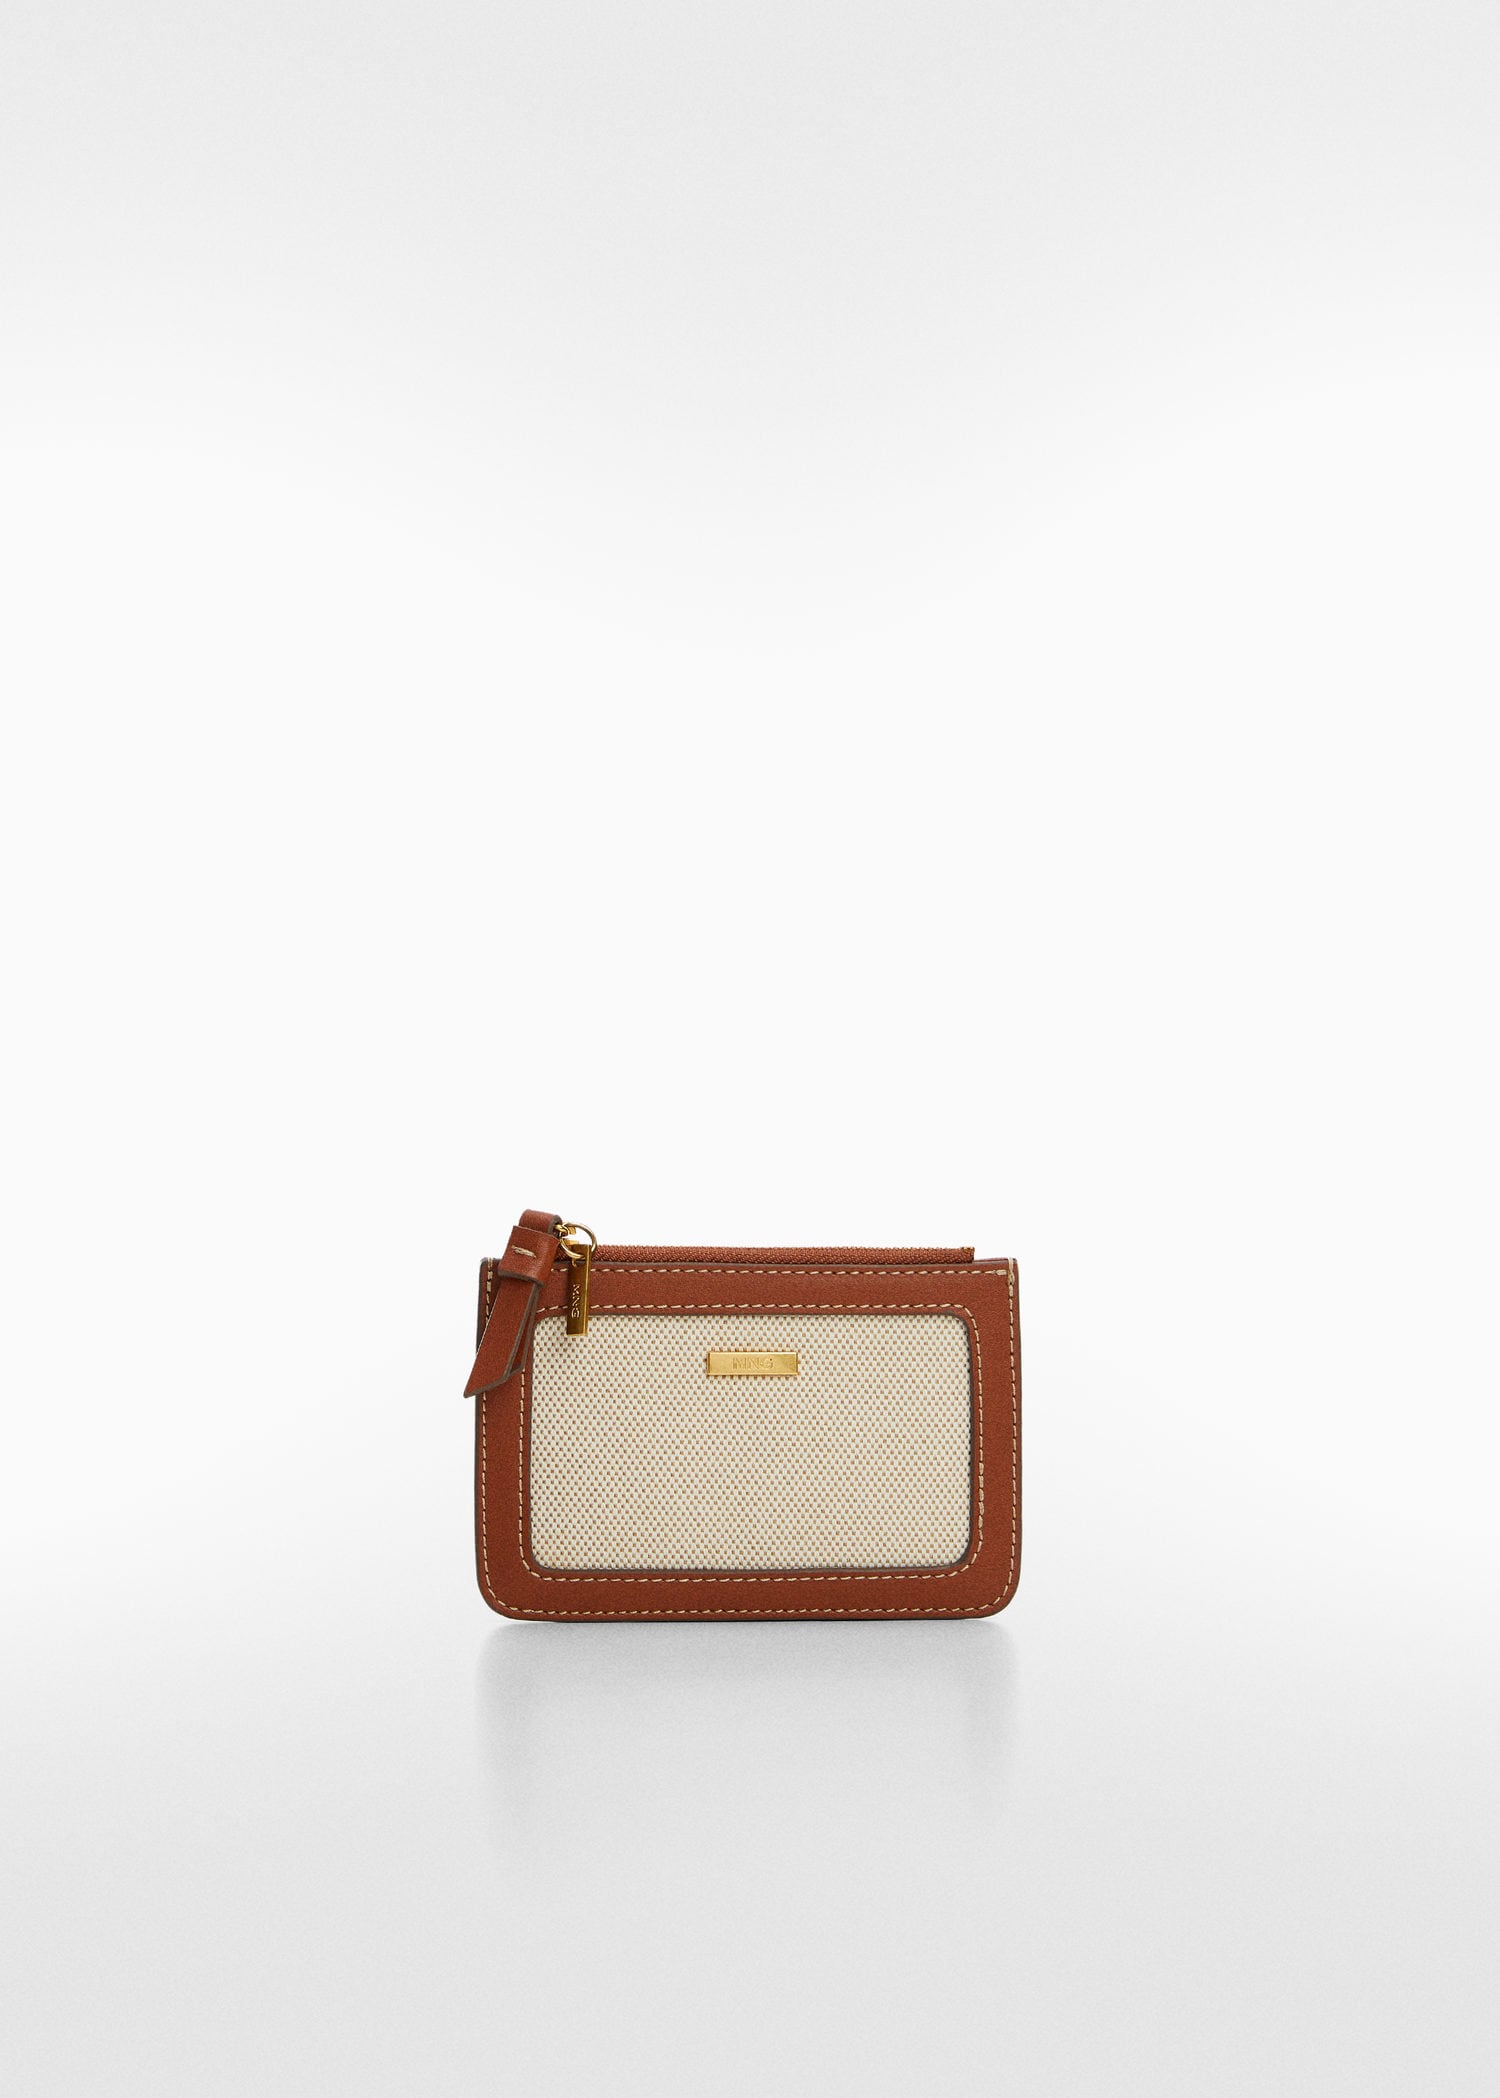 Business Mens Genuine Leather Wallet Zip Clutch Purse Card Holder Handbag  Big | eBay